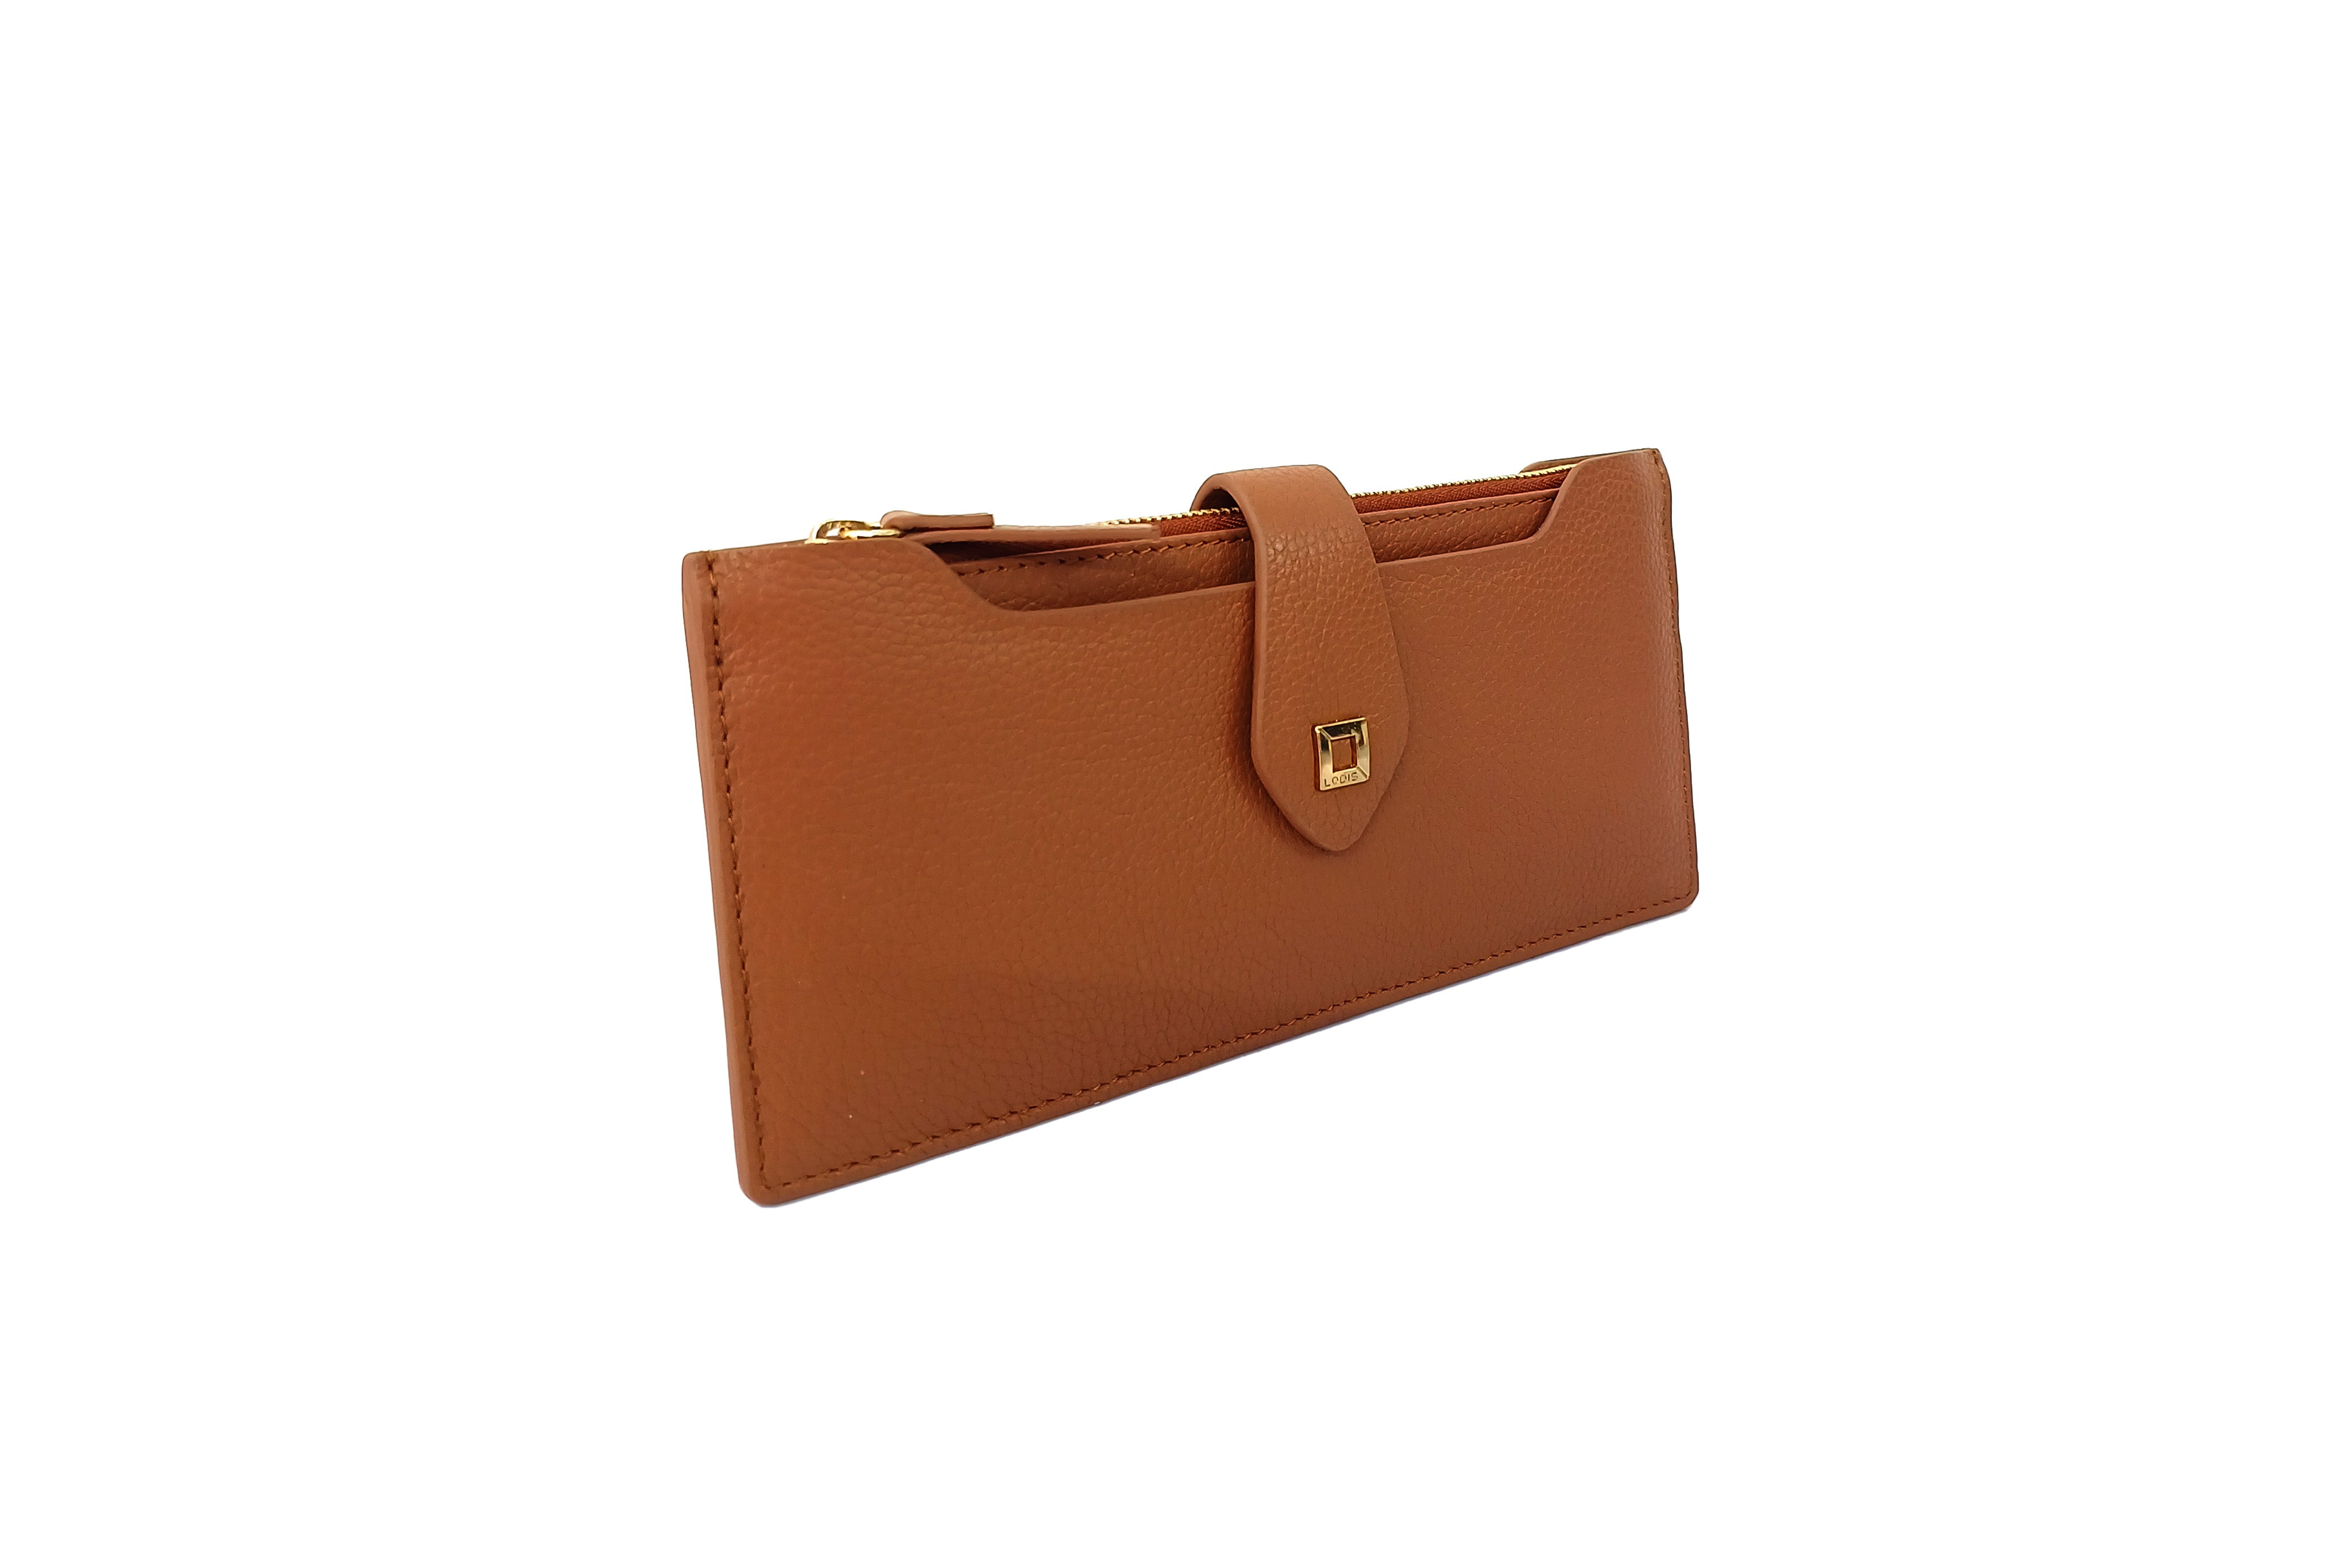  Shop Now Elegant  Slim & Compact Texas Leather Lodis Wallet 